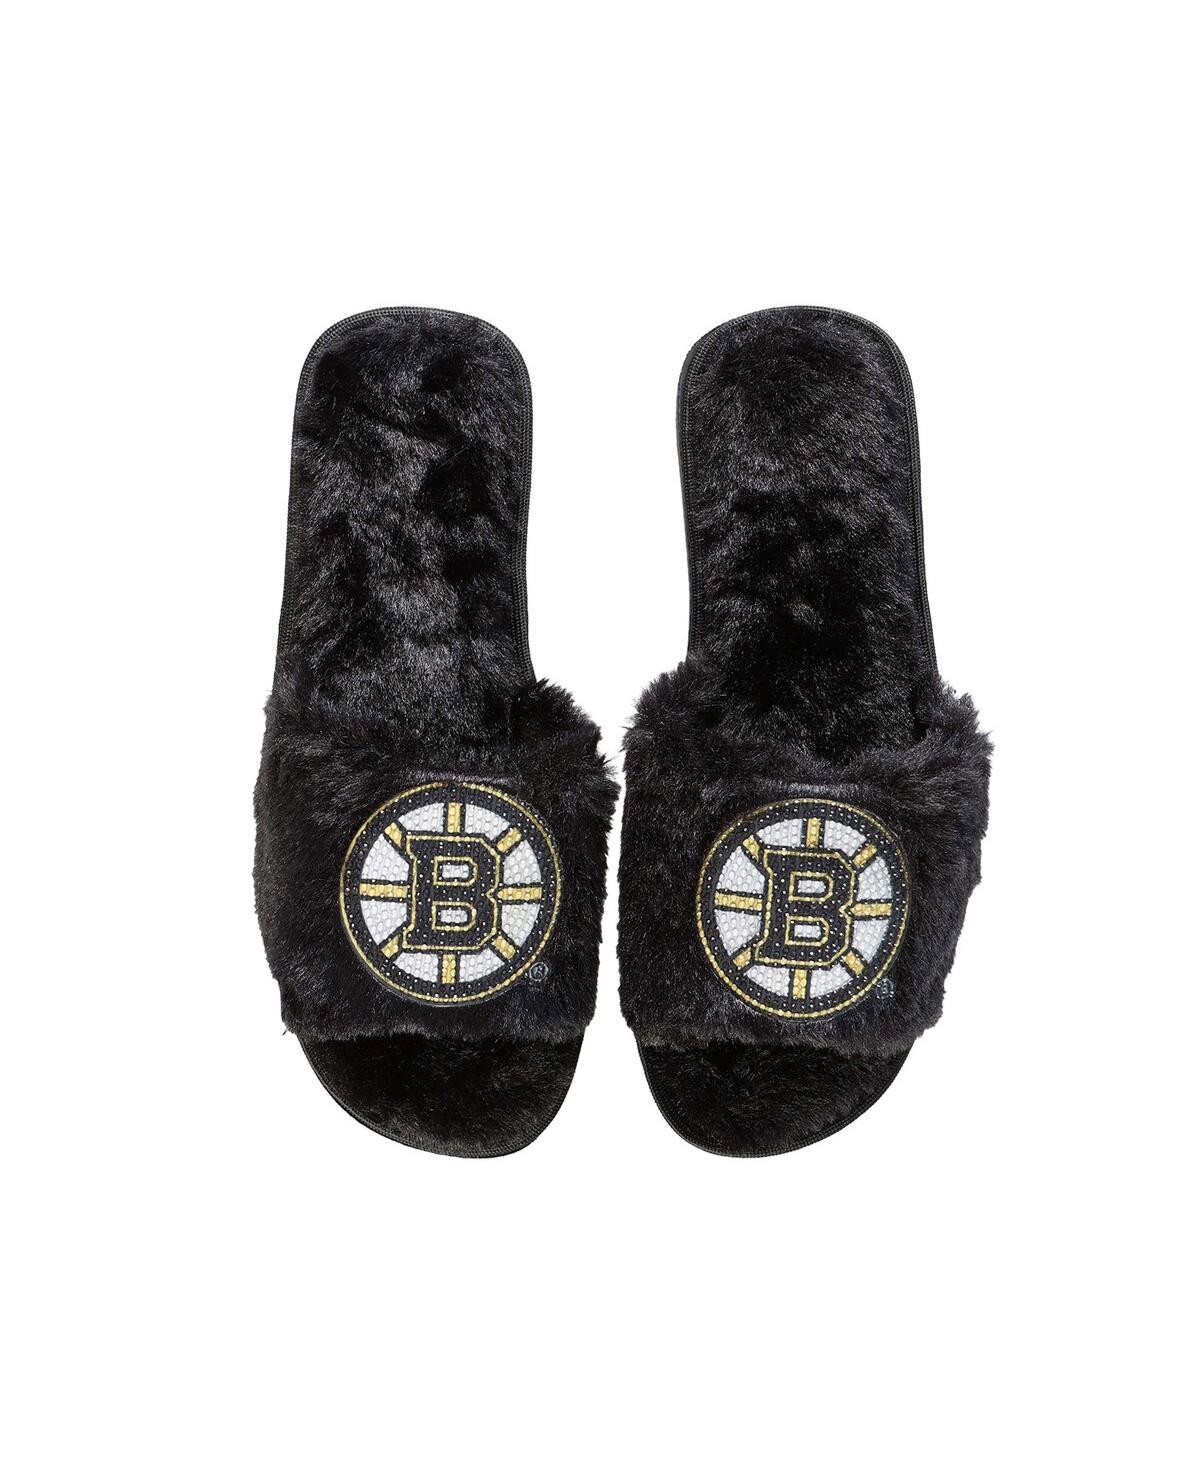 Foco Women's  Black Boston Bruins Rhinestone Fuzzy Slippers